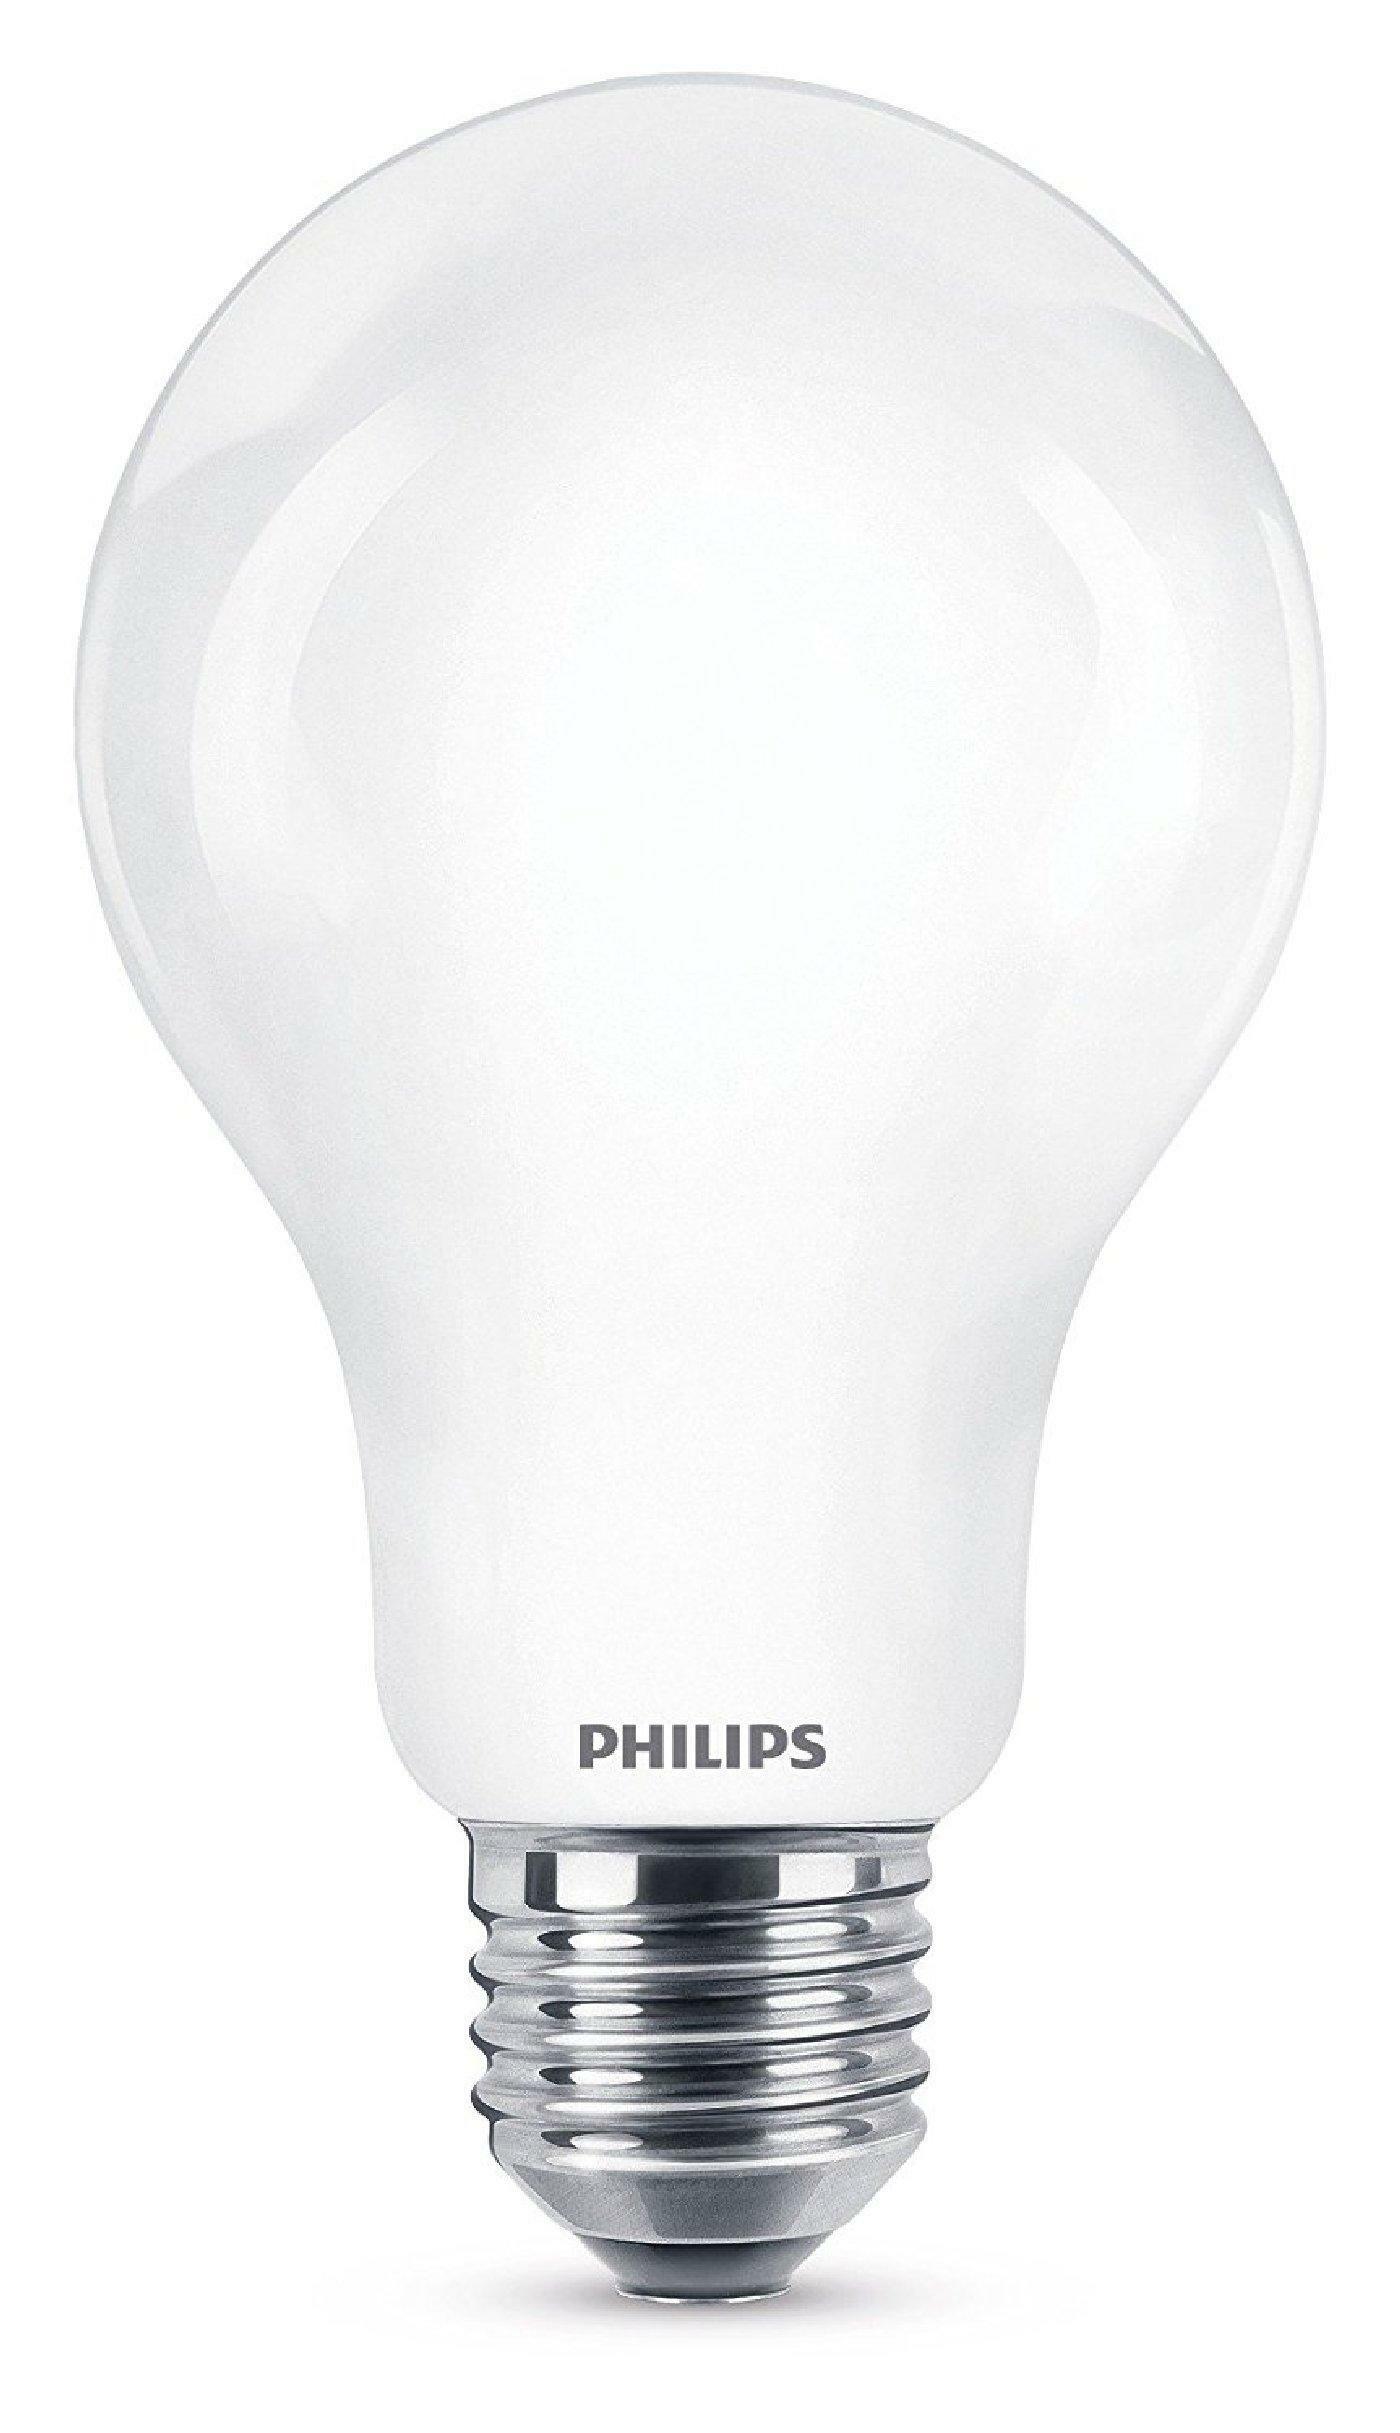 philips philips lampade professionali lampadina led led classic classe di efficienza a++ 100w a67 ww fr nd 1ct/1 incaled incaled100